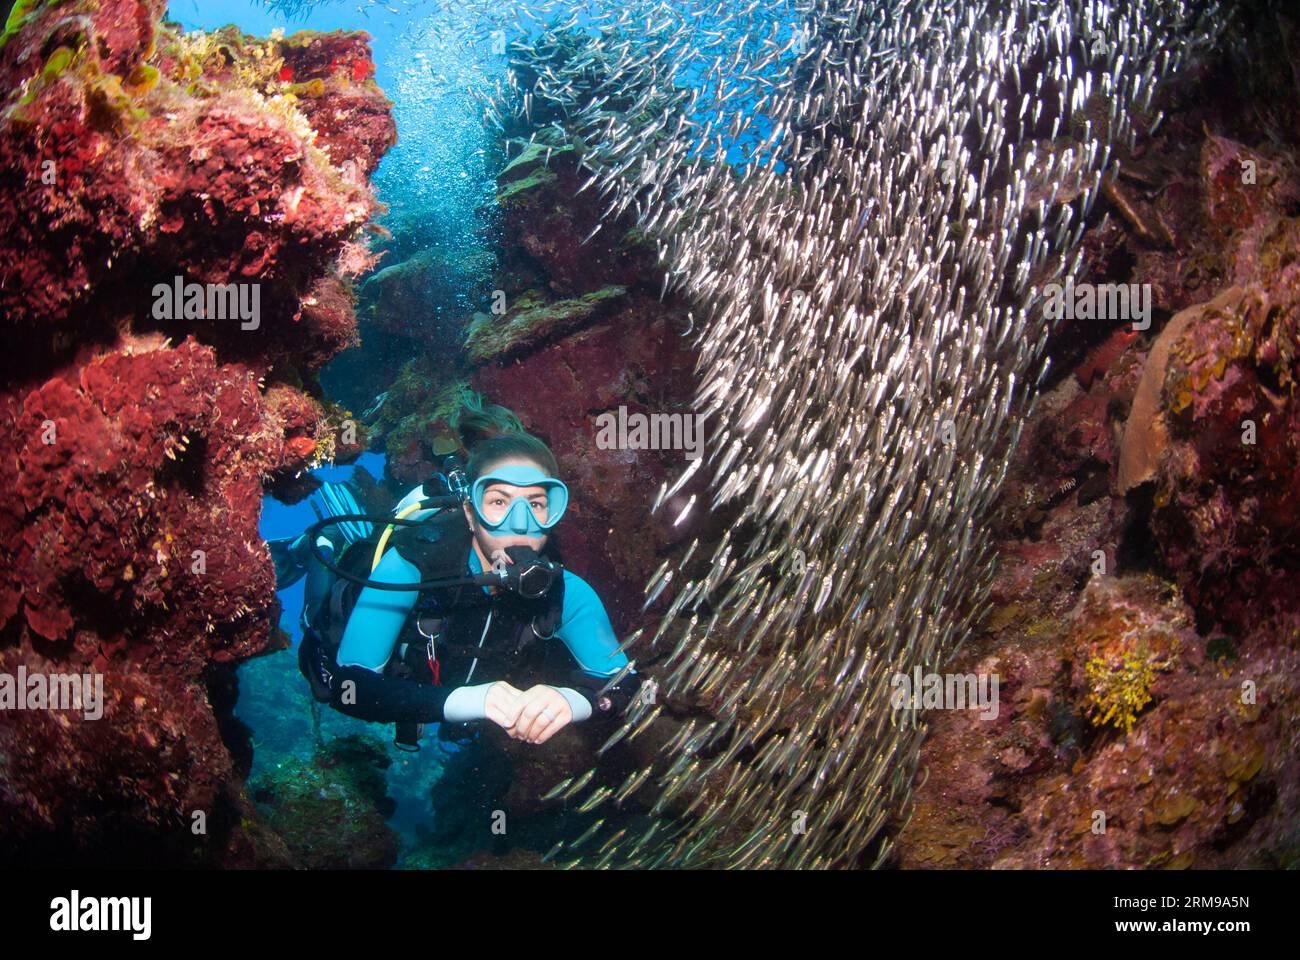 Scuba diver swimming through a school of silverside fish Stock Photo